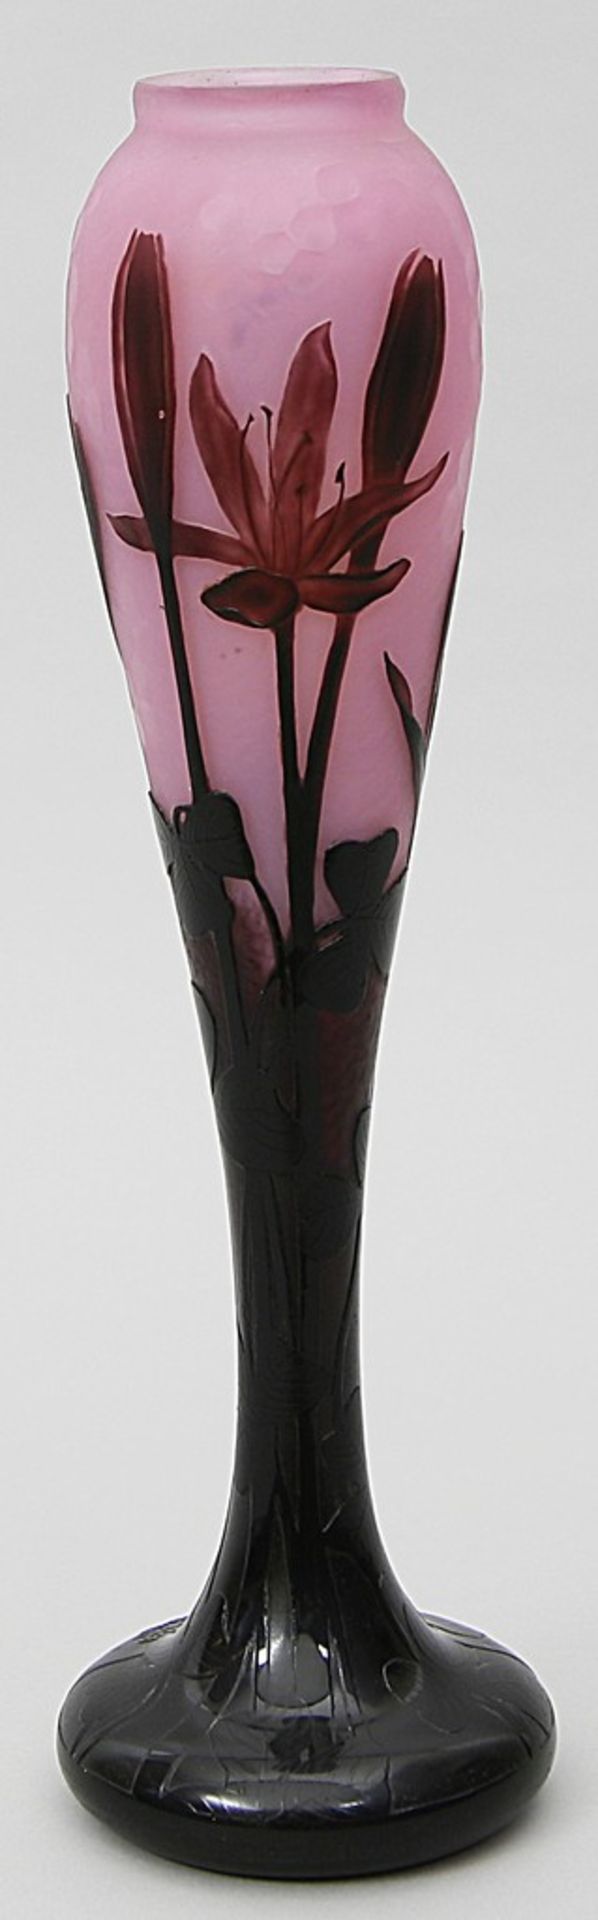 Jugendstil-Vase, Daum Nancy. Farbloses, matt geätztes Glas mit opakem, rosafarbenen I